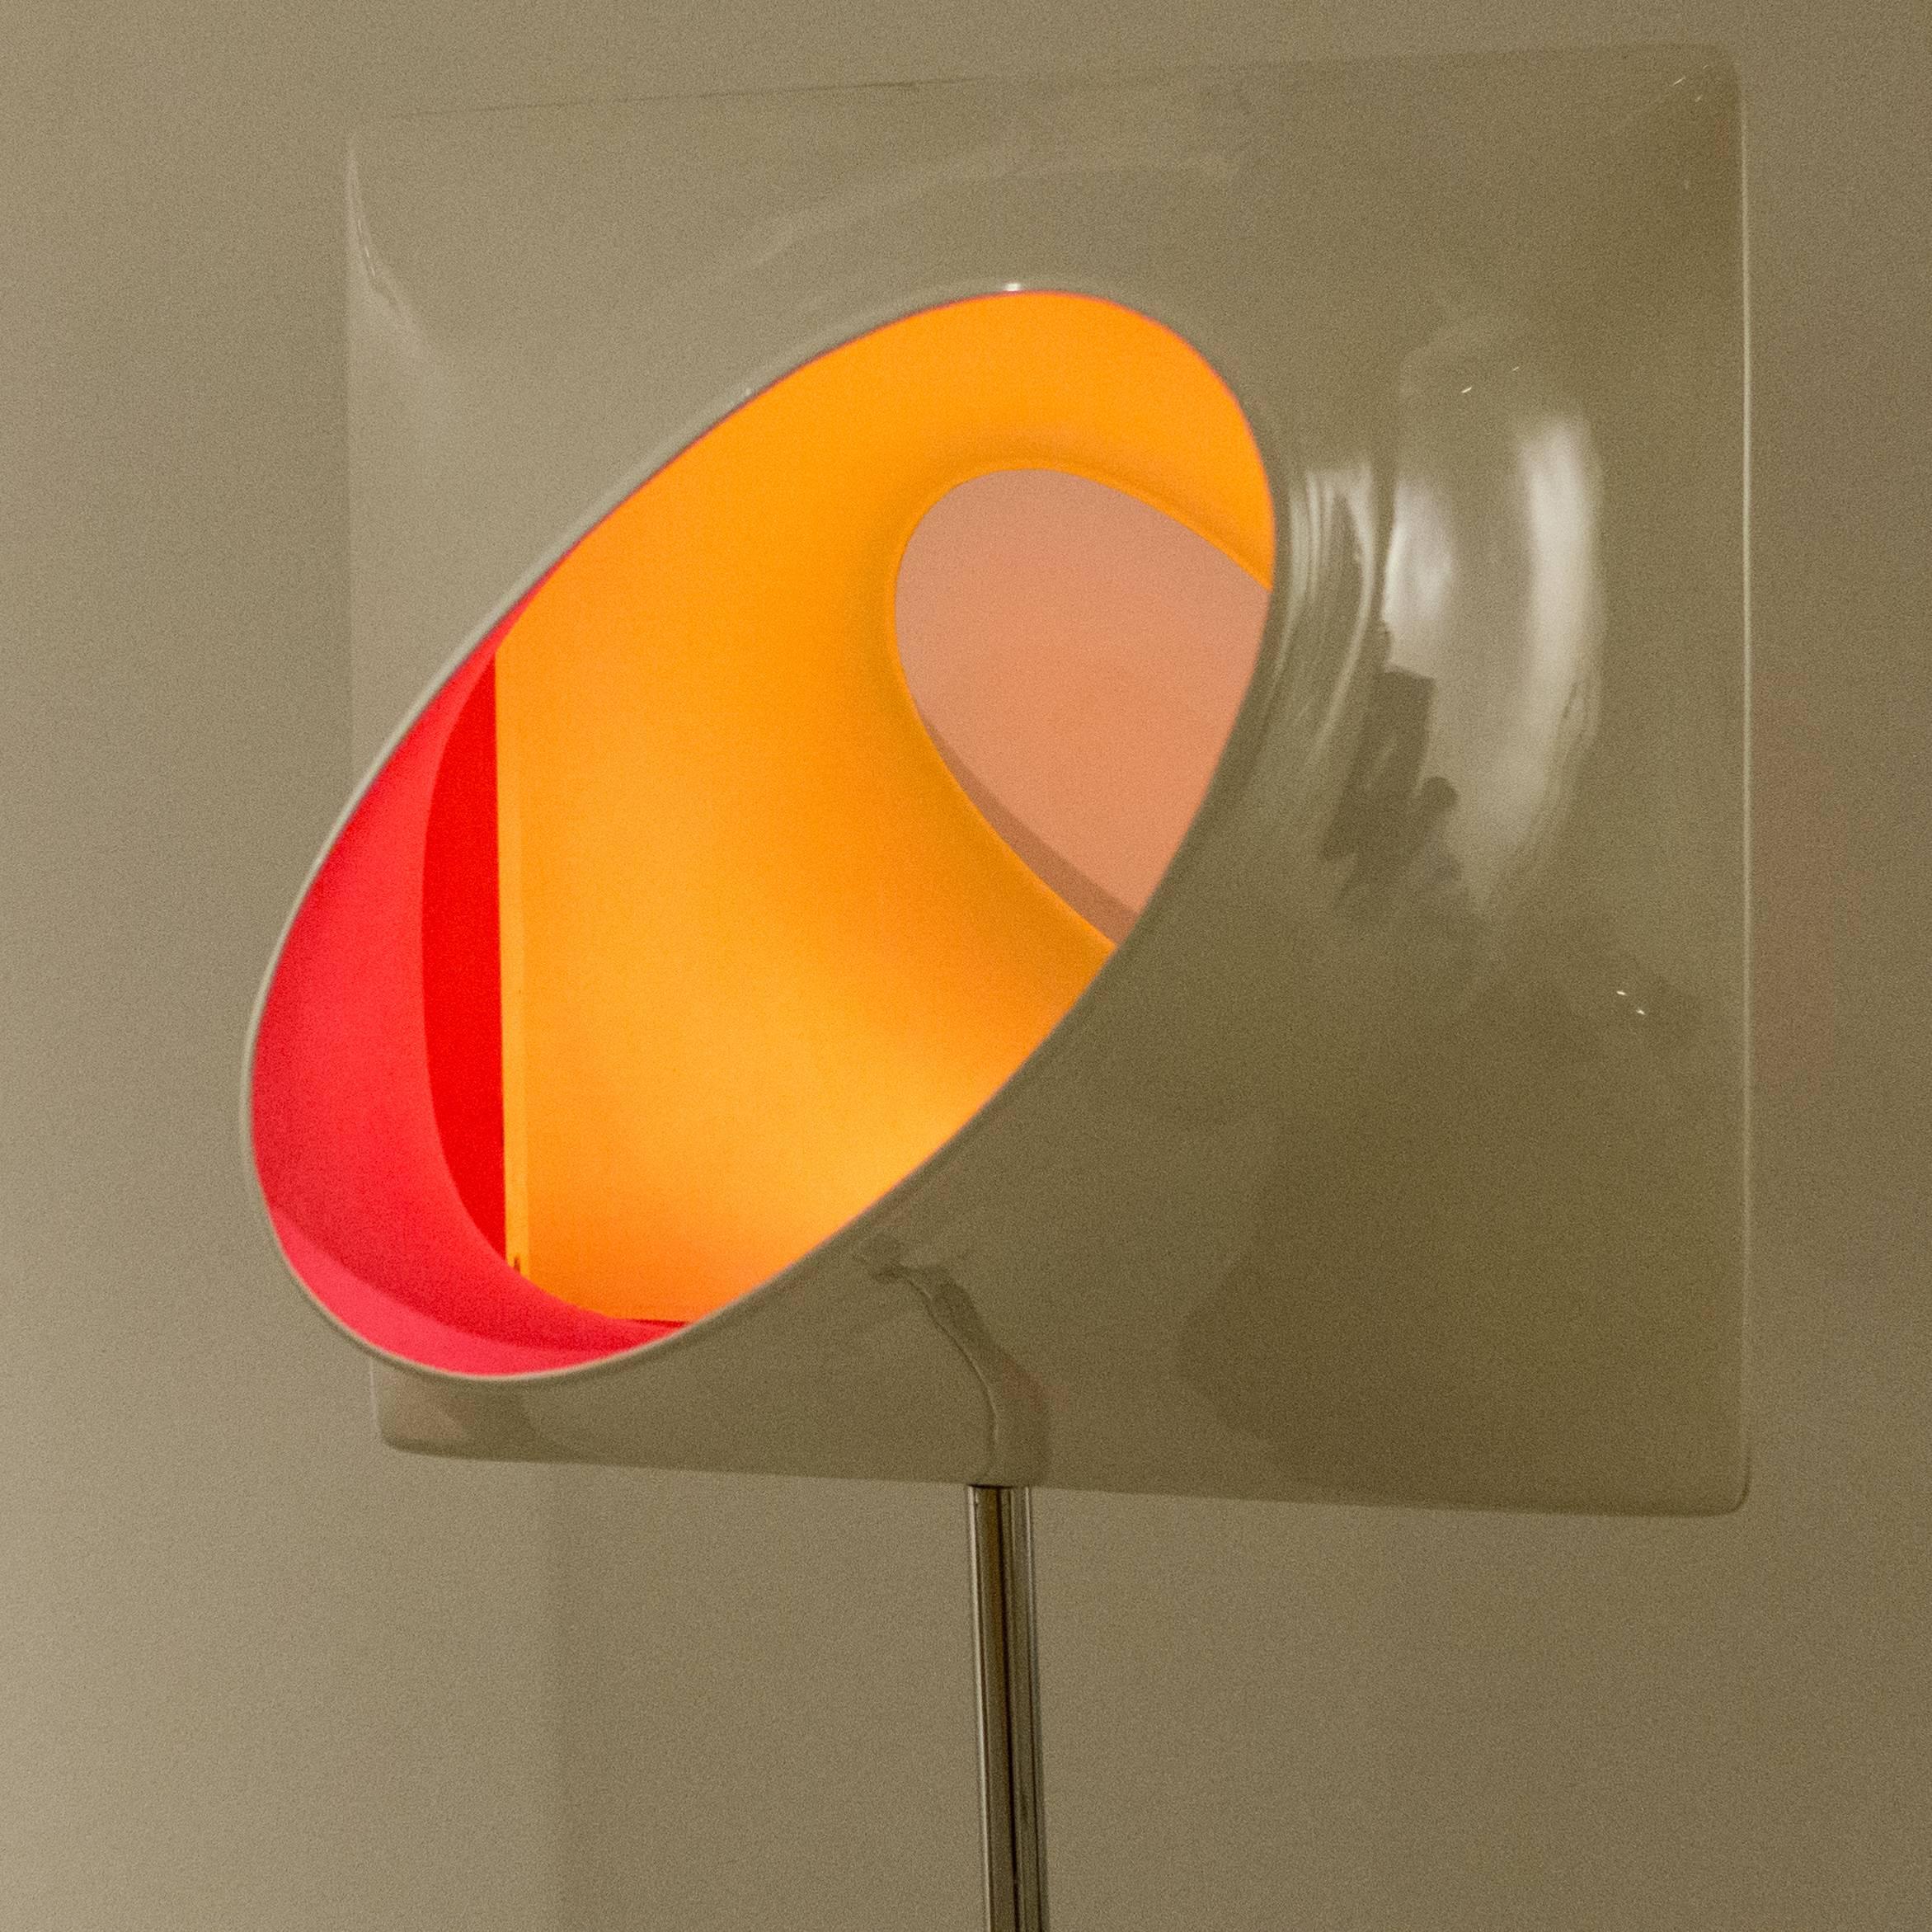 American Karim Rashid Prototype Light Sculpture